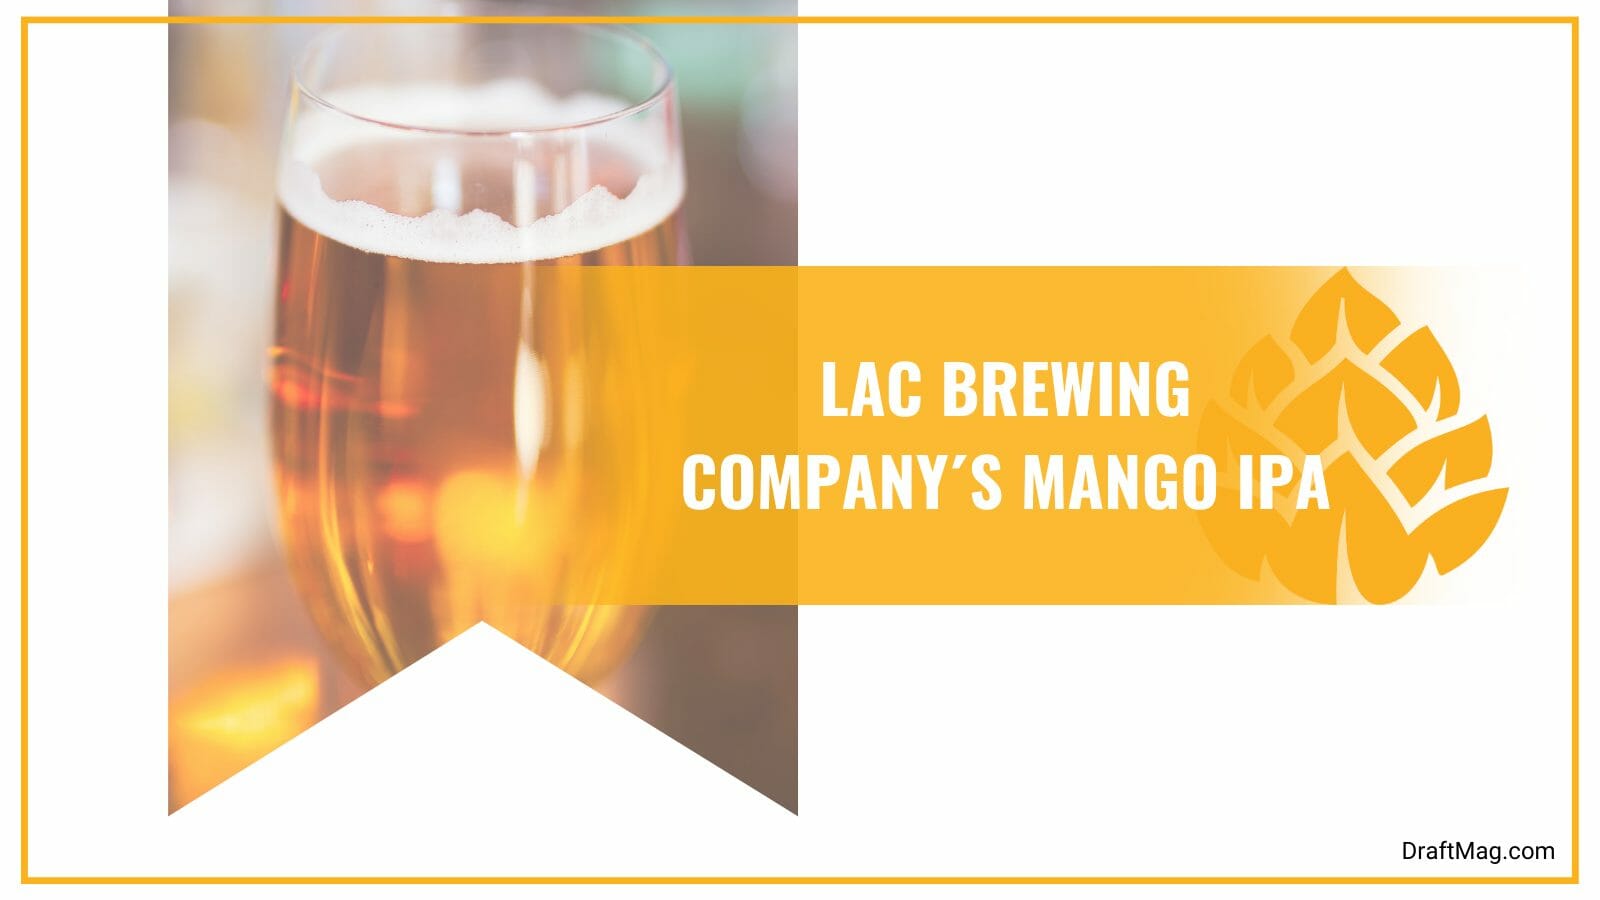 Lac brewing company mango ipa